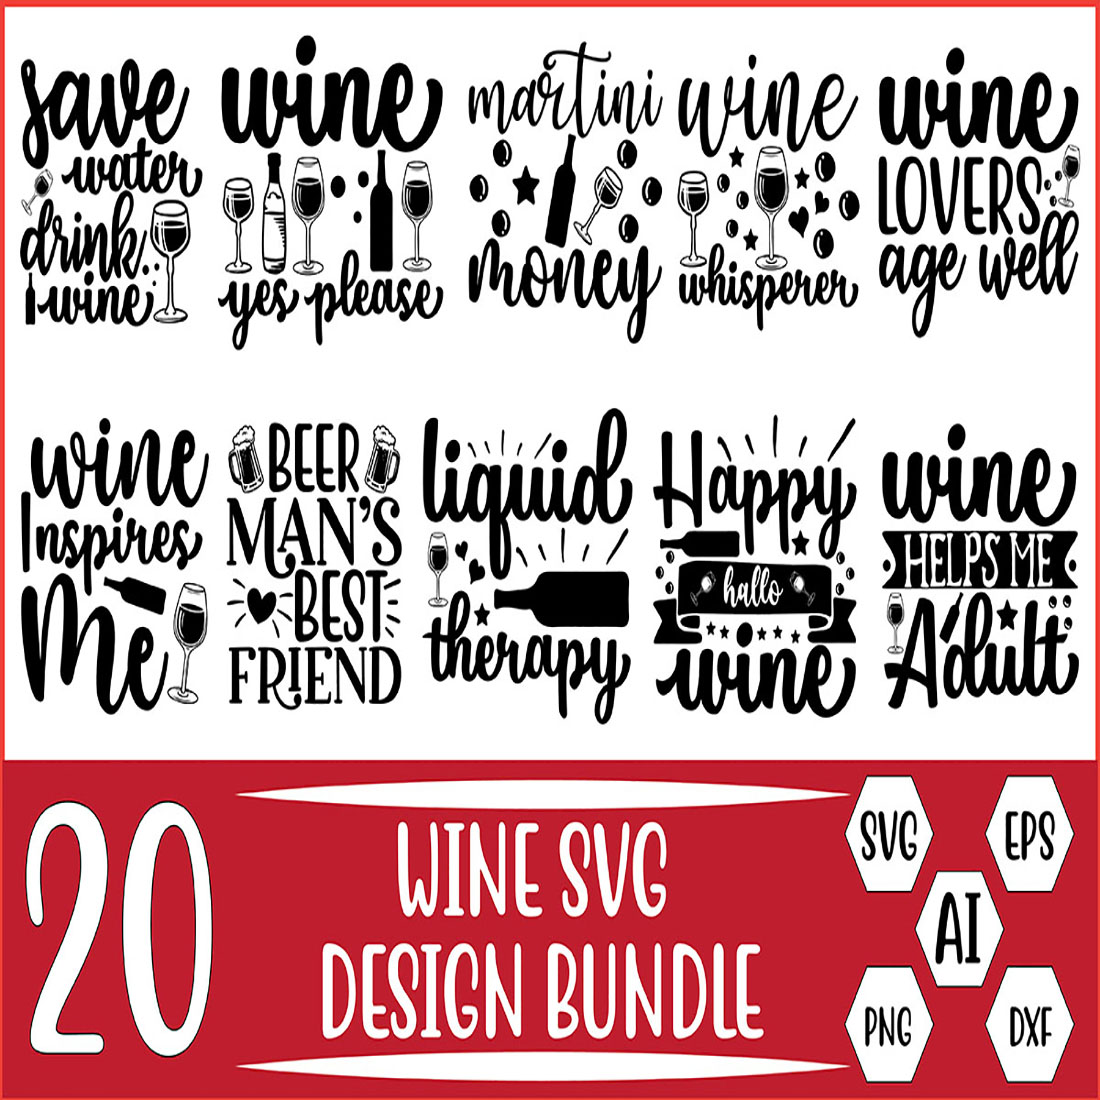 20 Wine SVG Design Bundle Vector Template preview image.